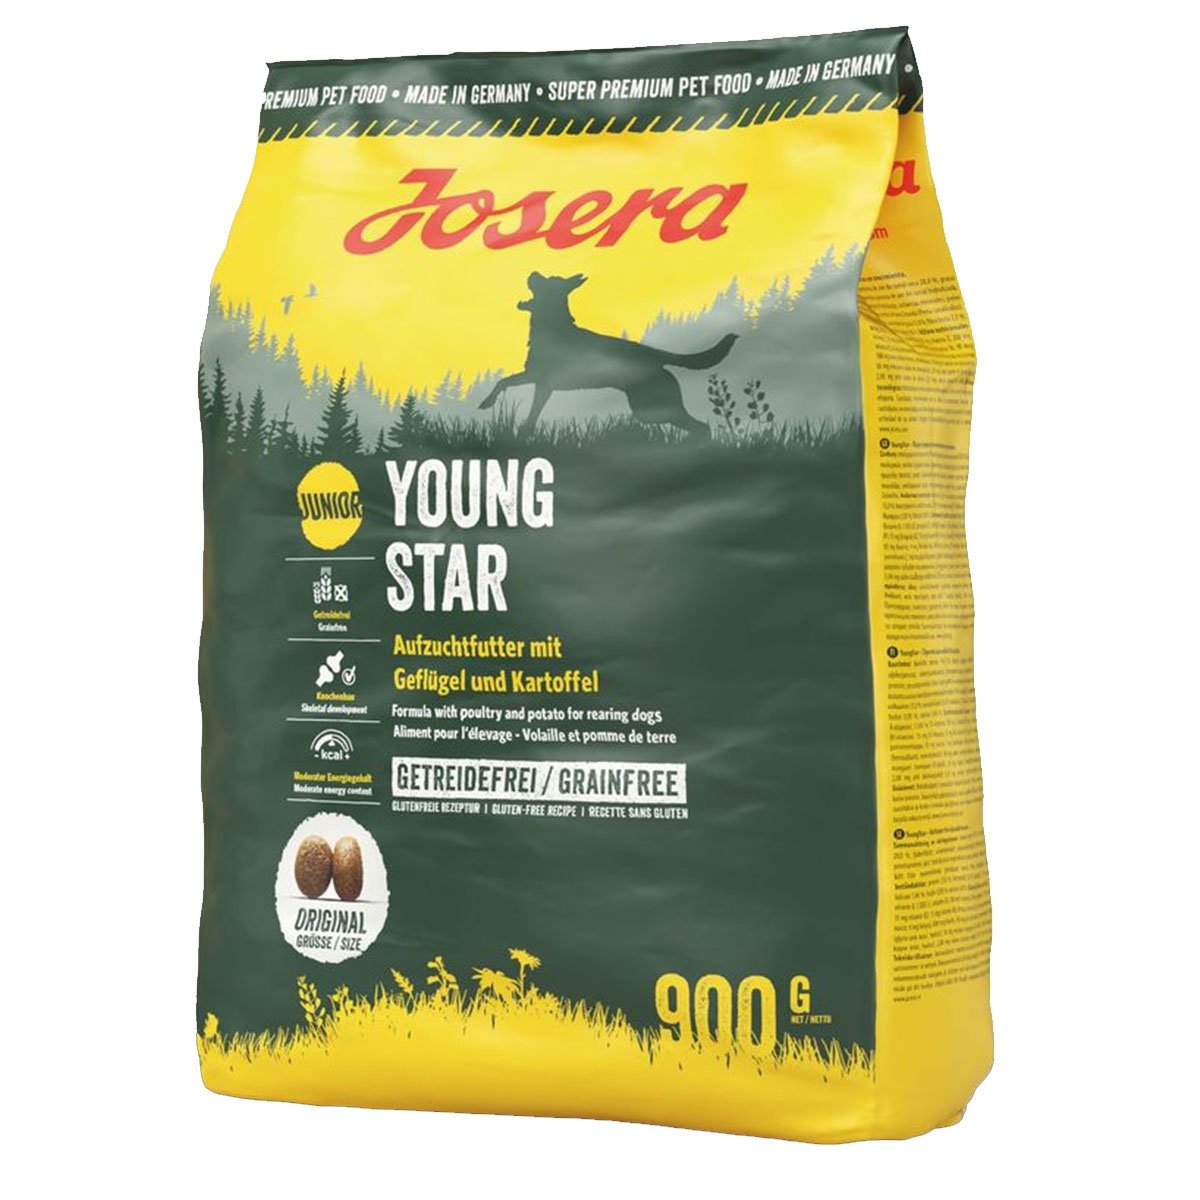 Josera Young Star 900g von Josera